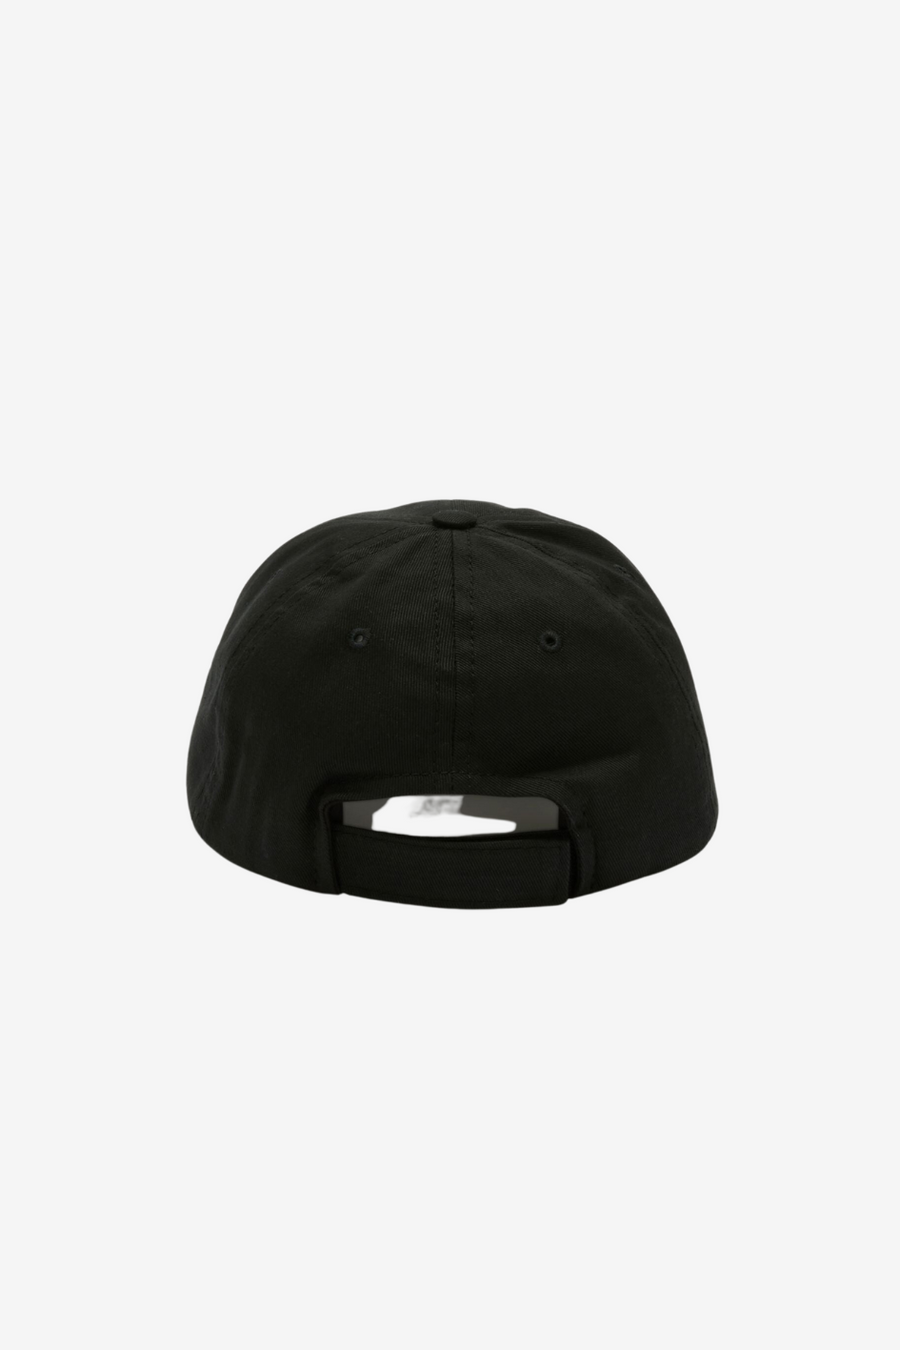 Black Baseball Cap with adjustable Rear Strap